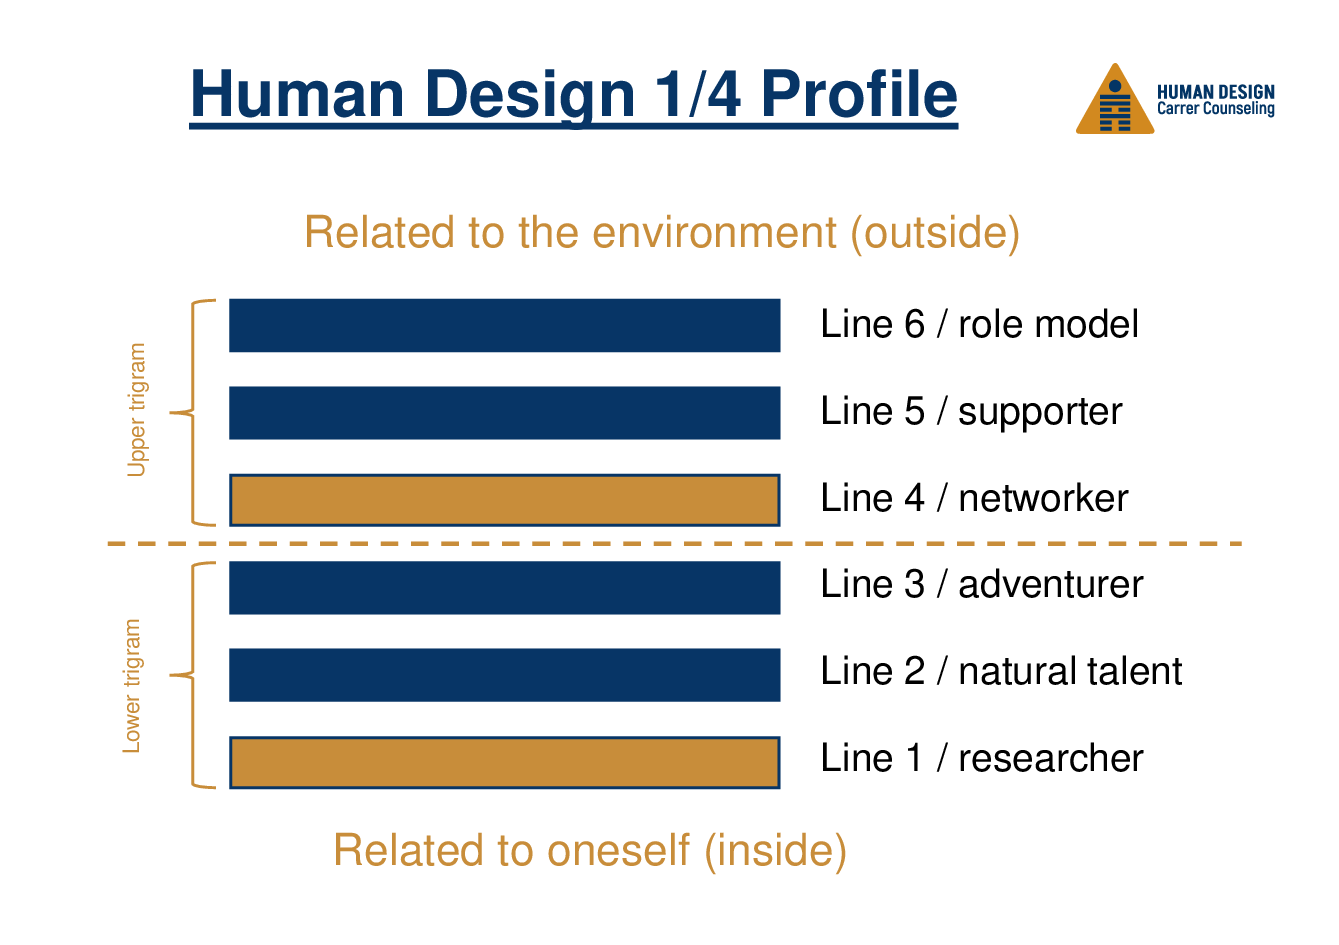 Human Design 1/4 Profile on the job